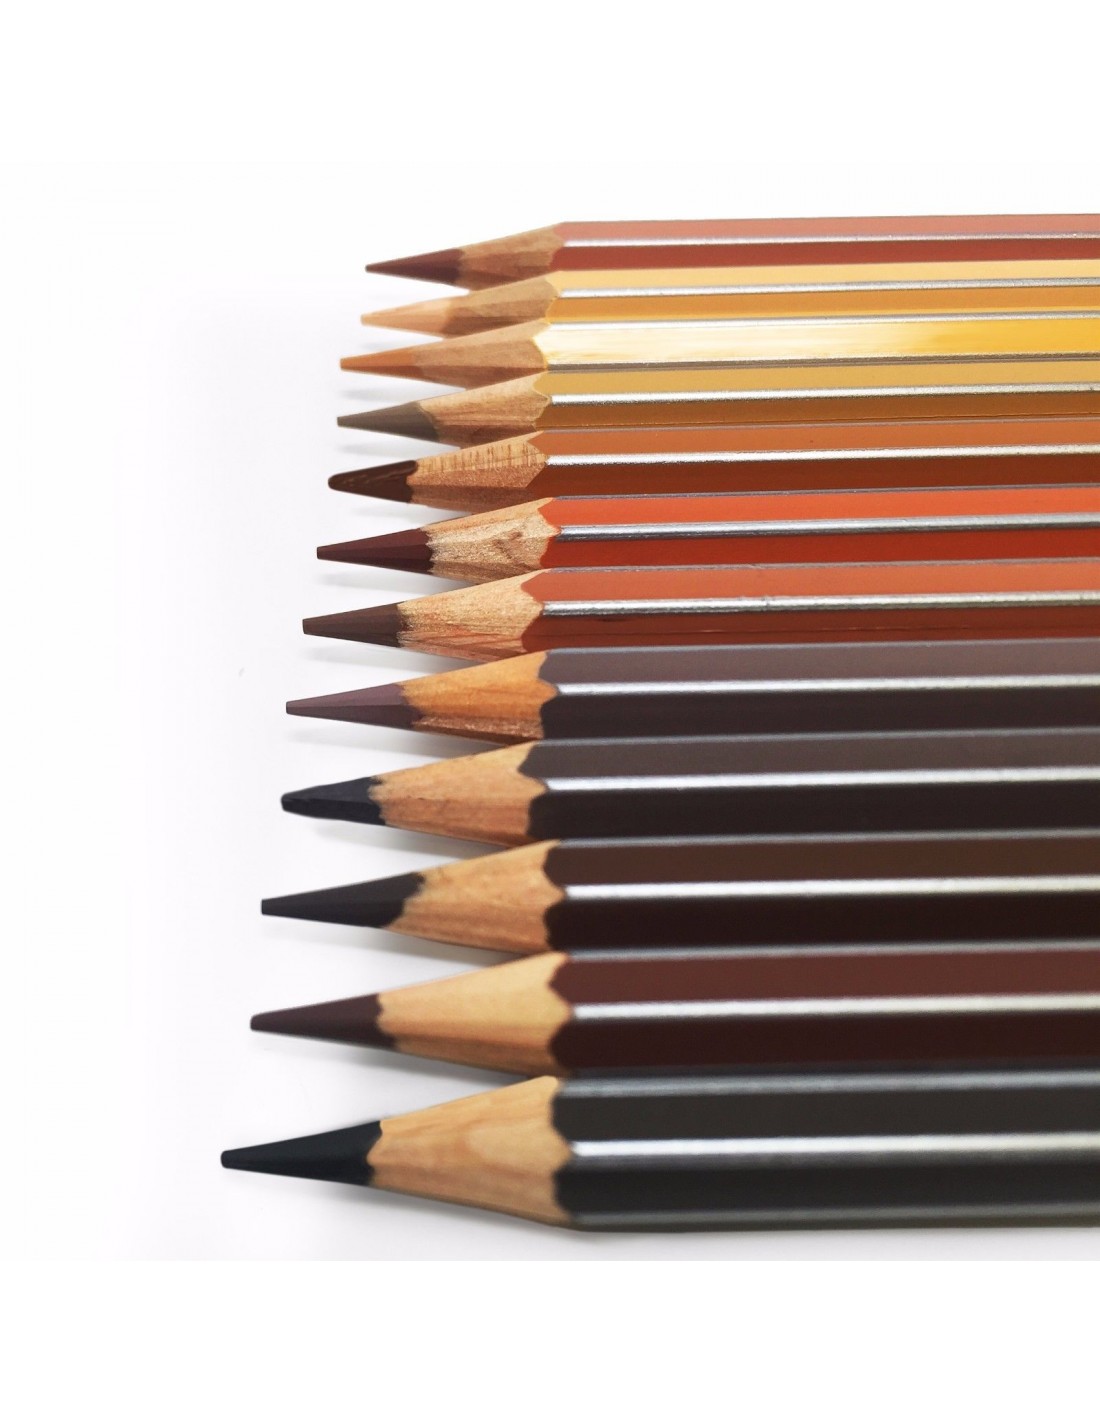 Rotuladores Giotto Turbo color skin tones - Material escolar